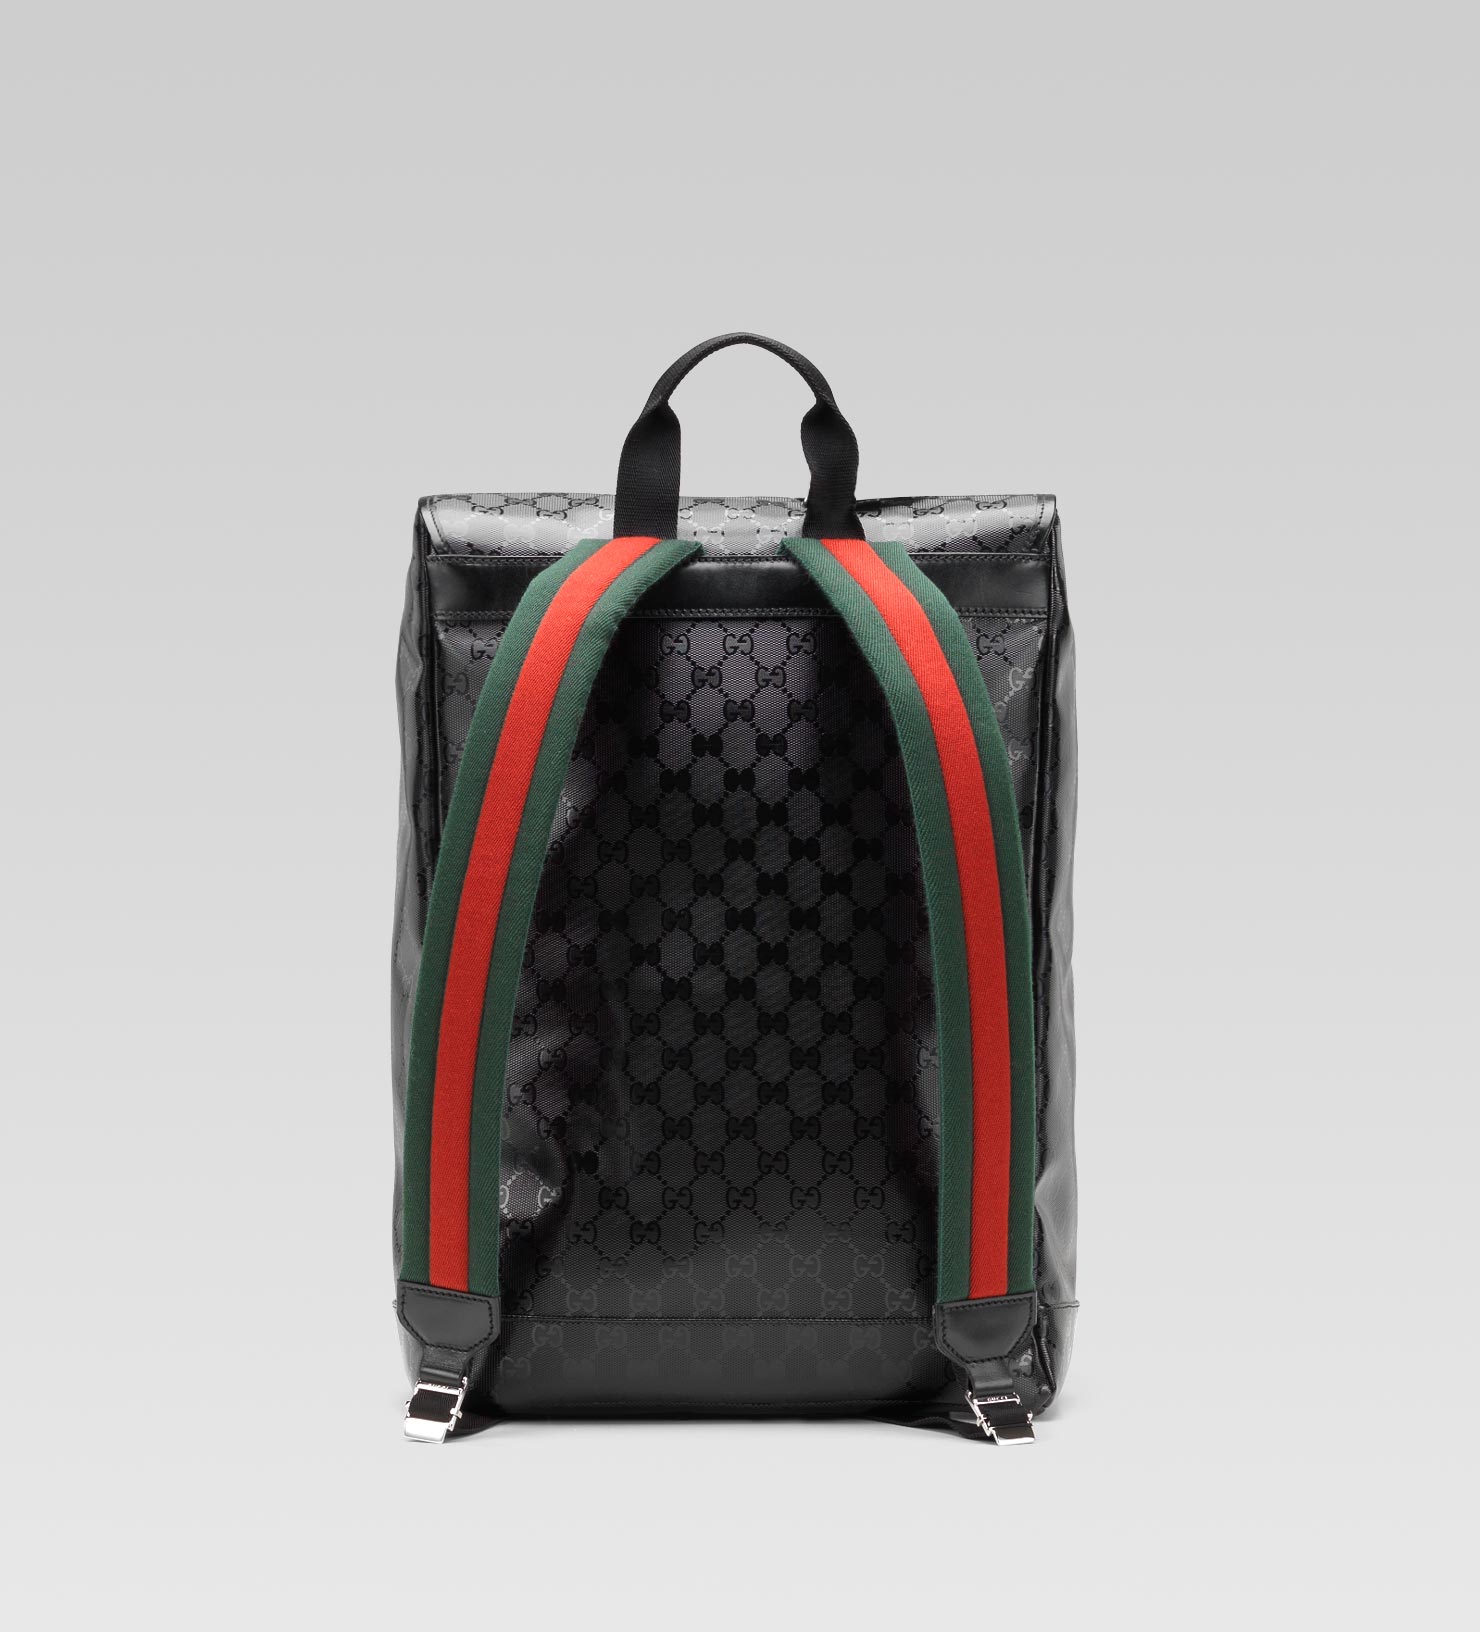 Gucci Backpack in Black for Men - Lyst